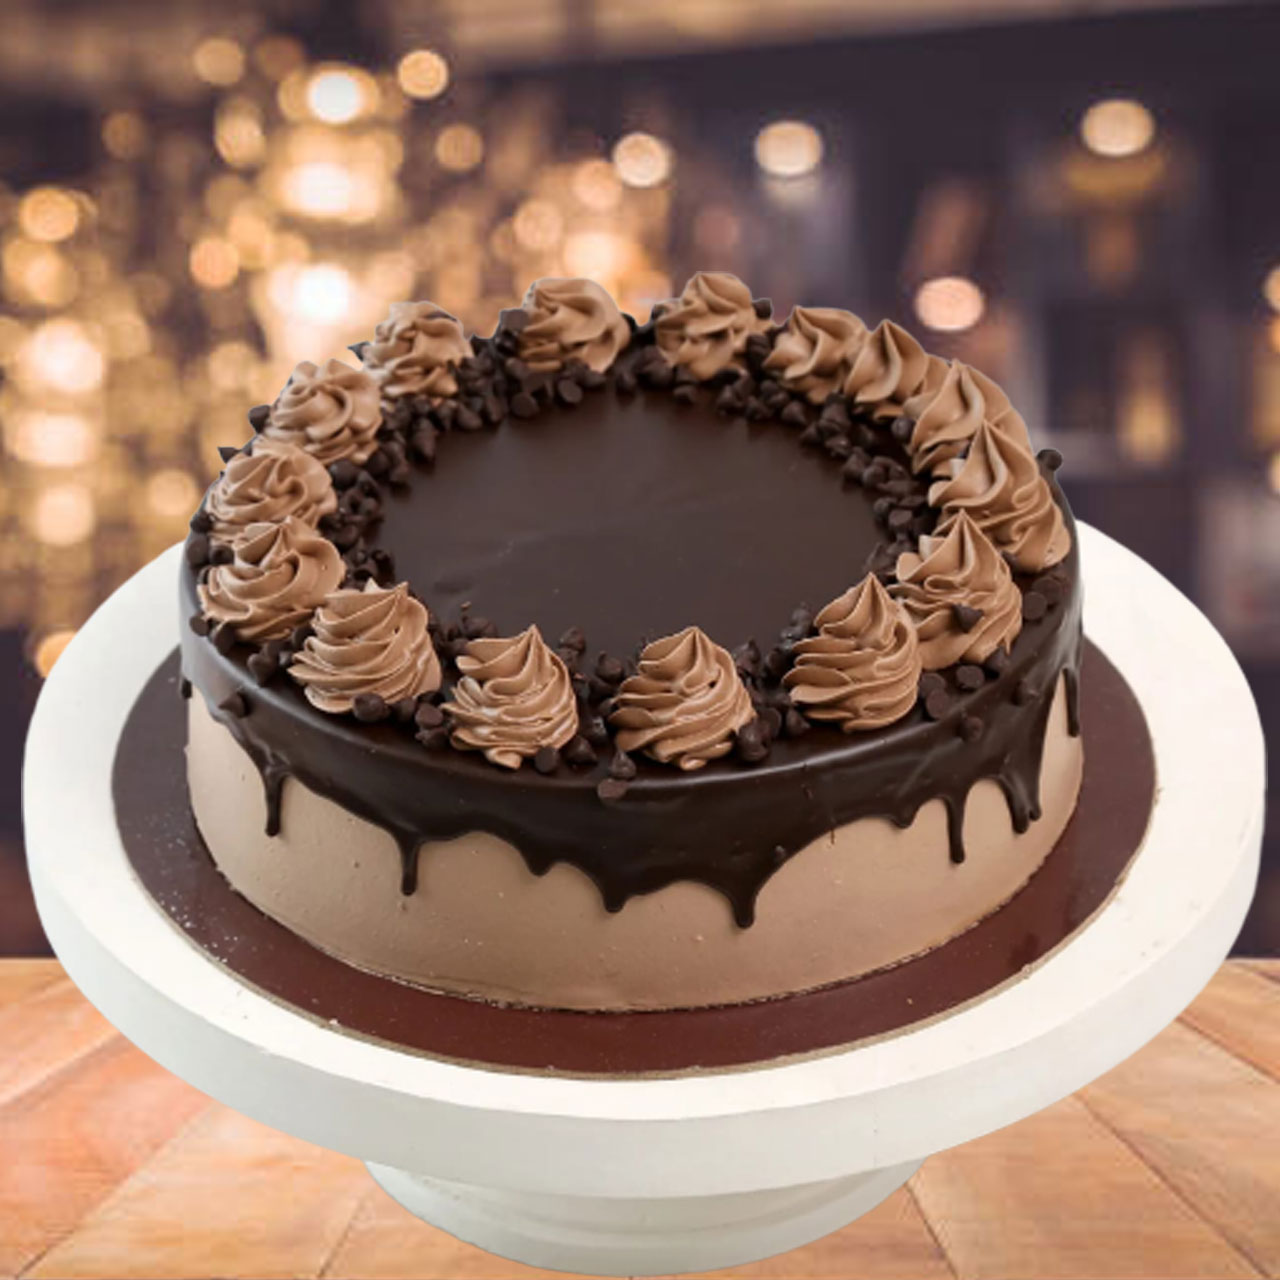 Choco velvet cake | Trivandrum Cake House | Online Cake Shop in Trivandrum